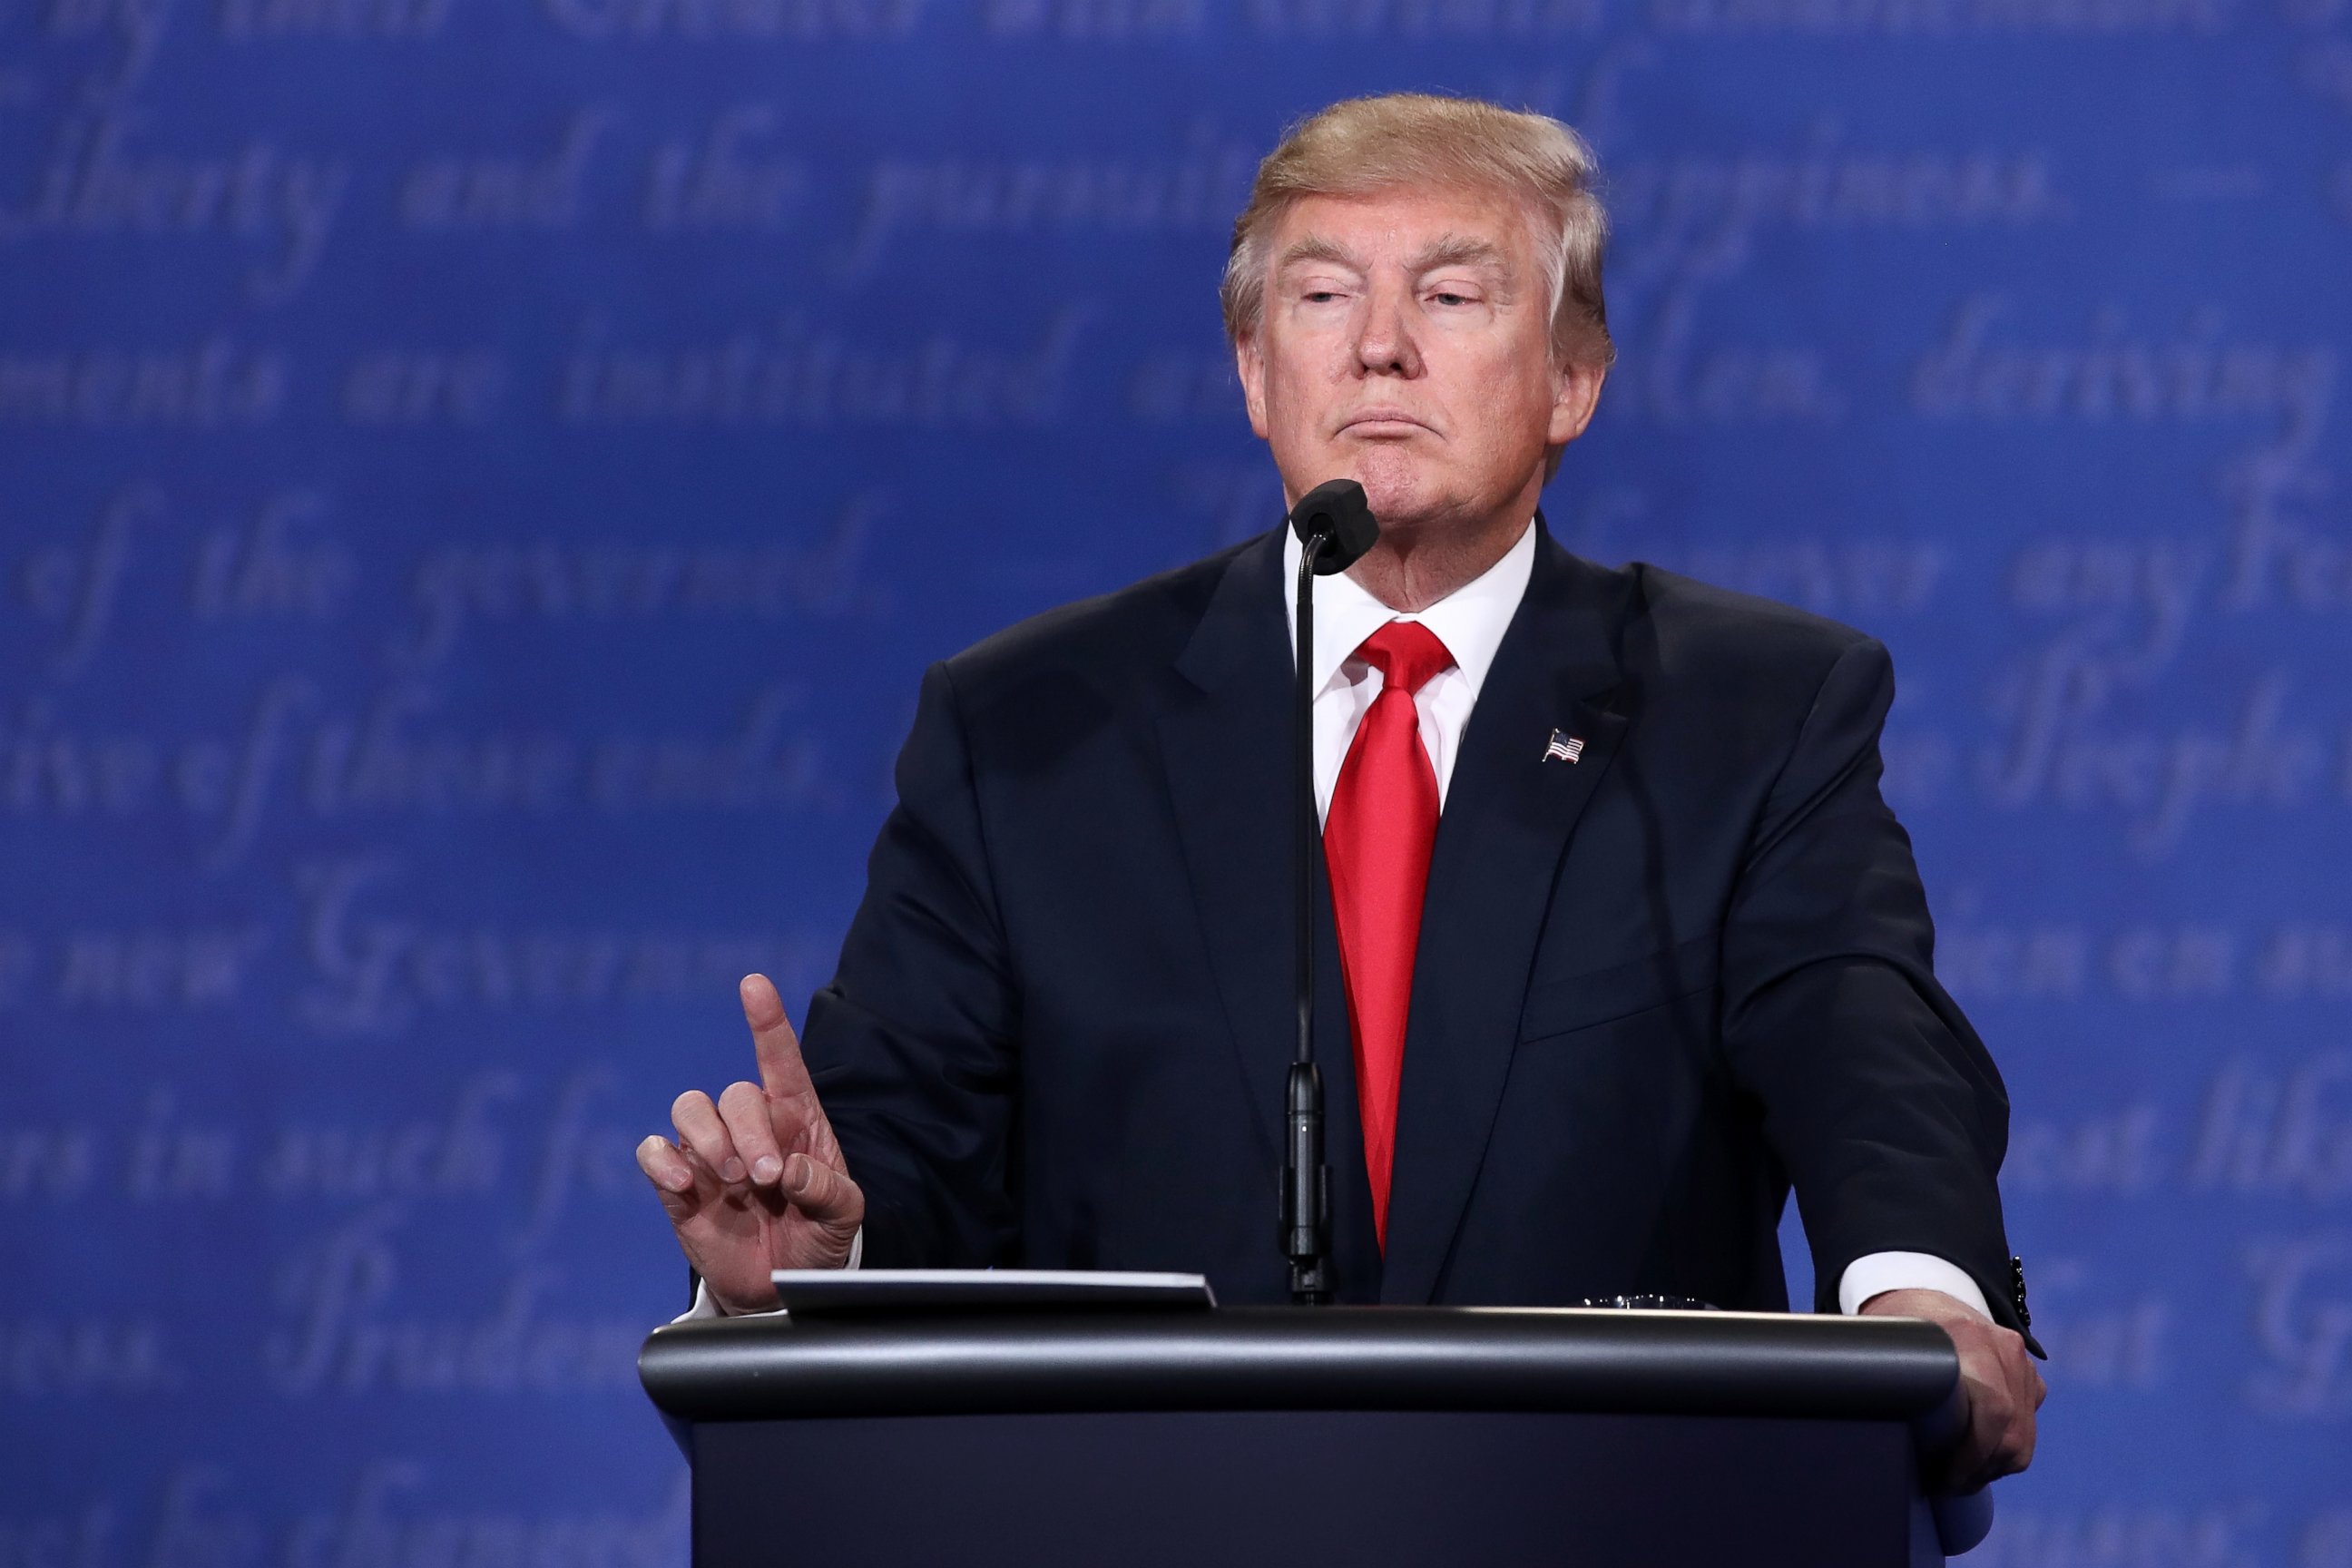 PHOTO: Republican presidential nominee Donald Trump gestures as he speaks during the third U.S. presidential debate at the Thomas & Mack Center on October 19,2016 in Las Vegas, Nevada. 